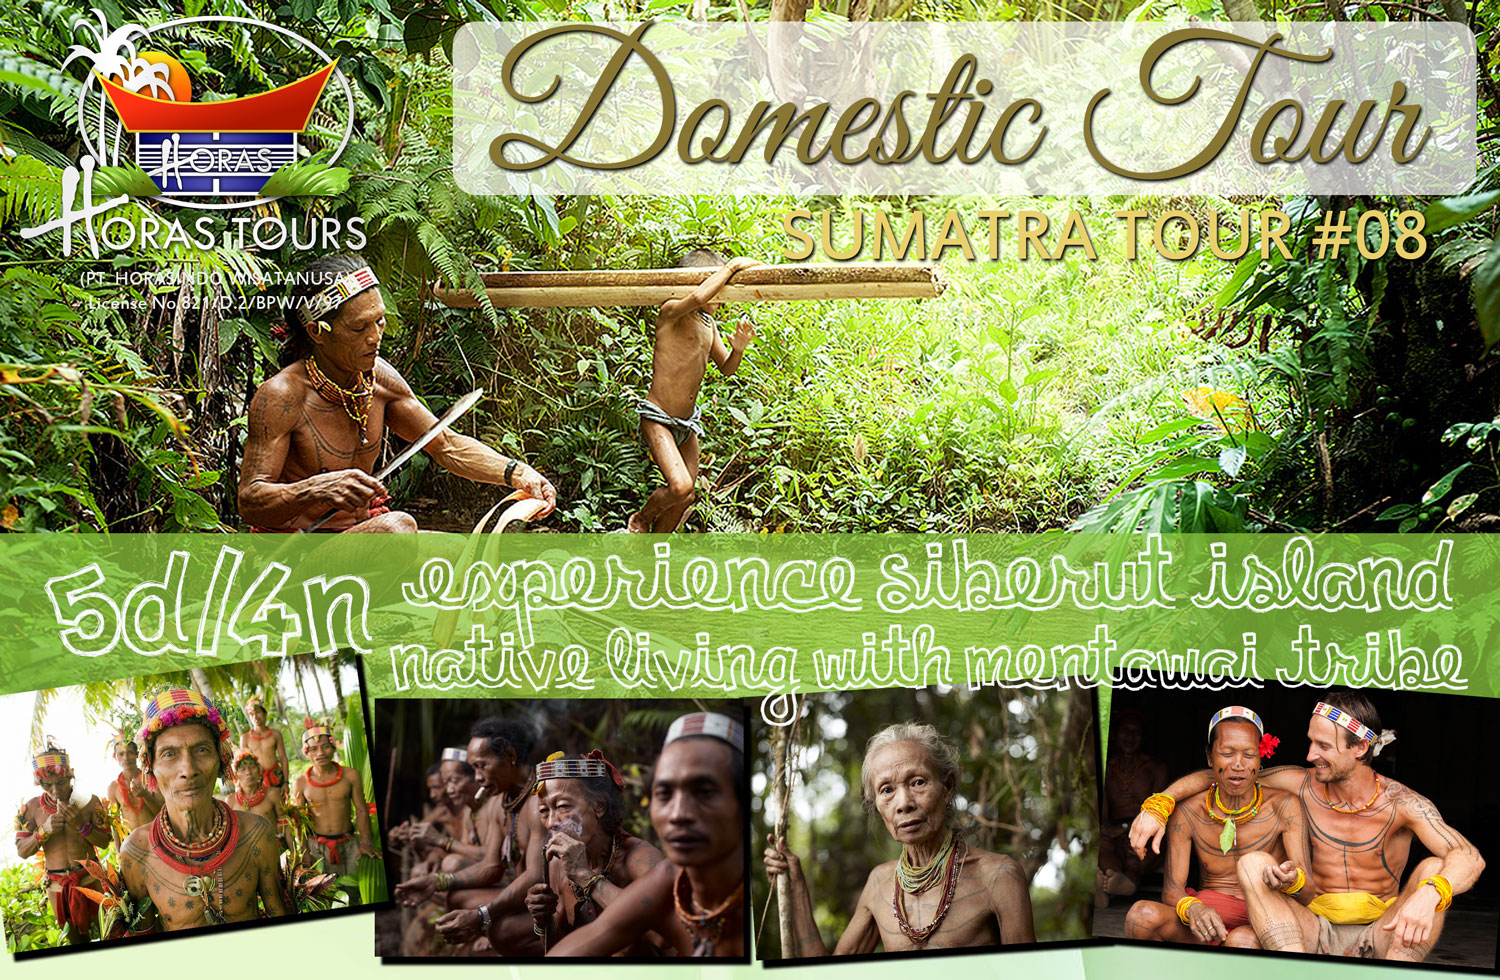 Siberut Island - Live with Mentawaians